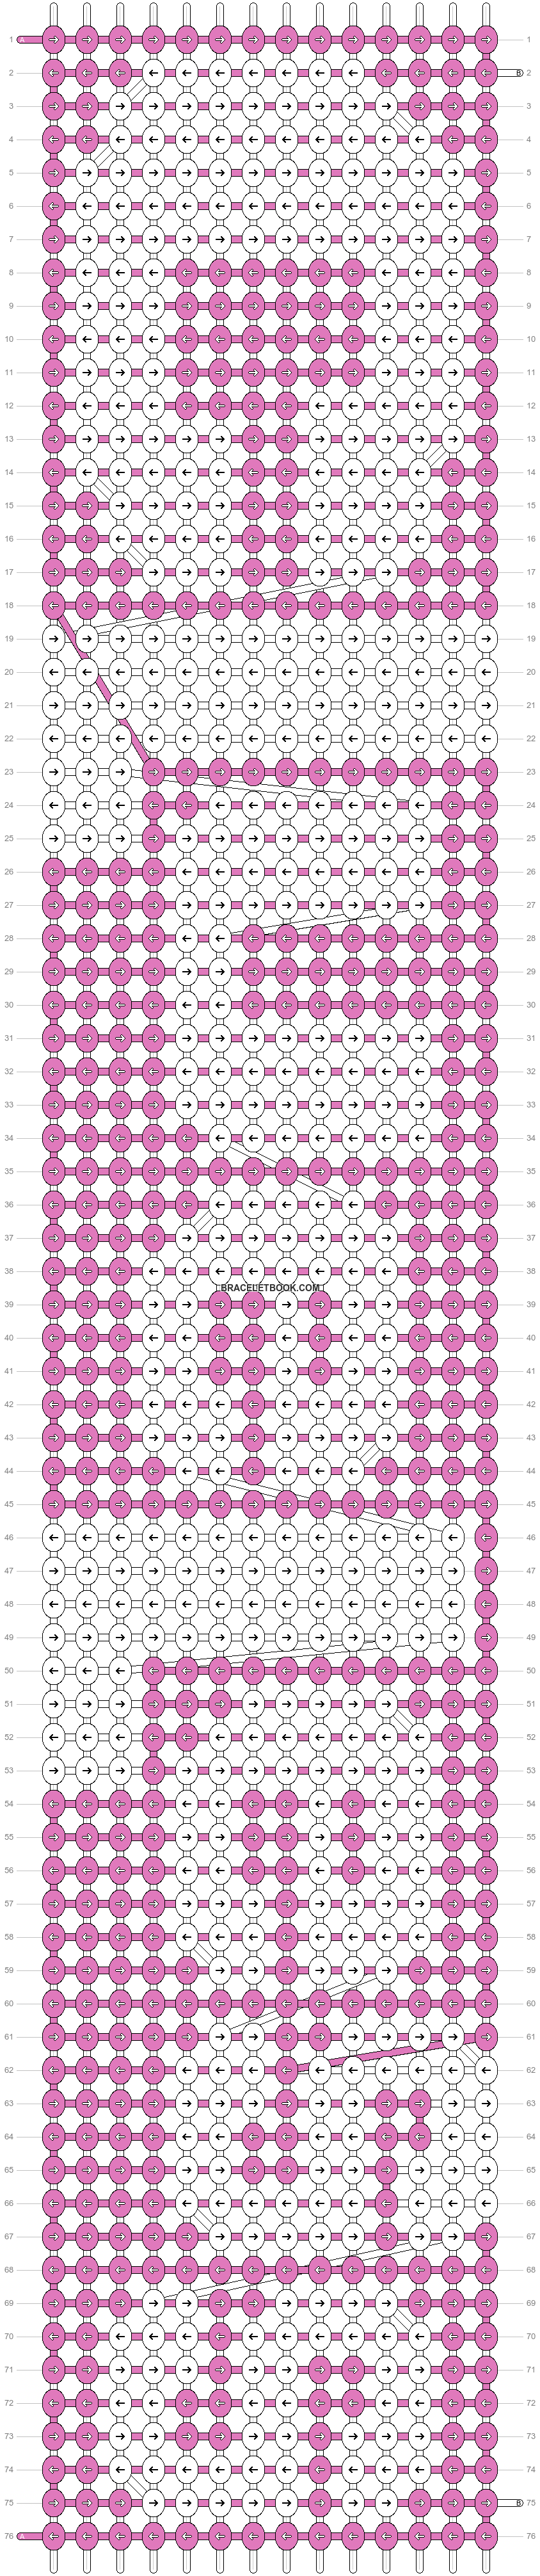 Alpha pattern #37464 pattern